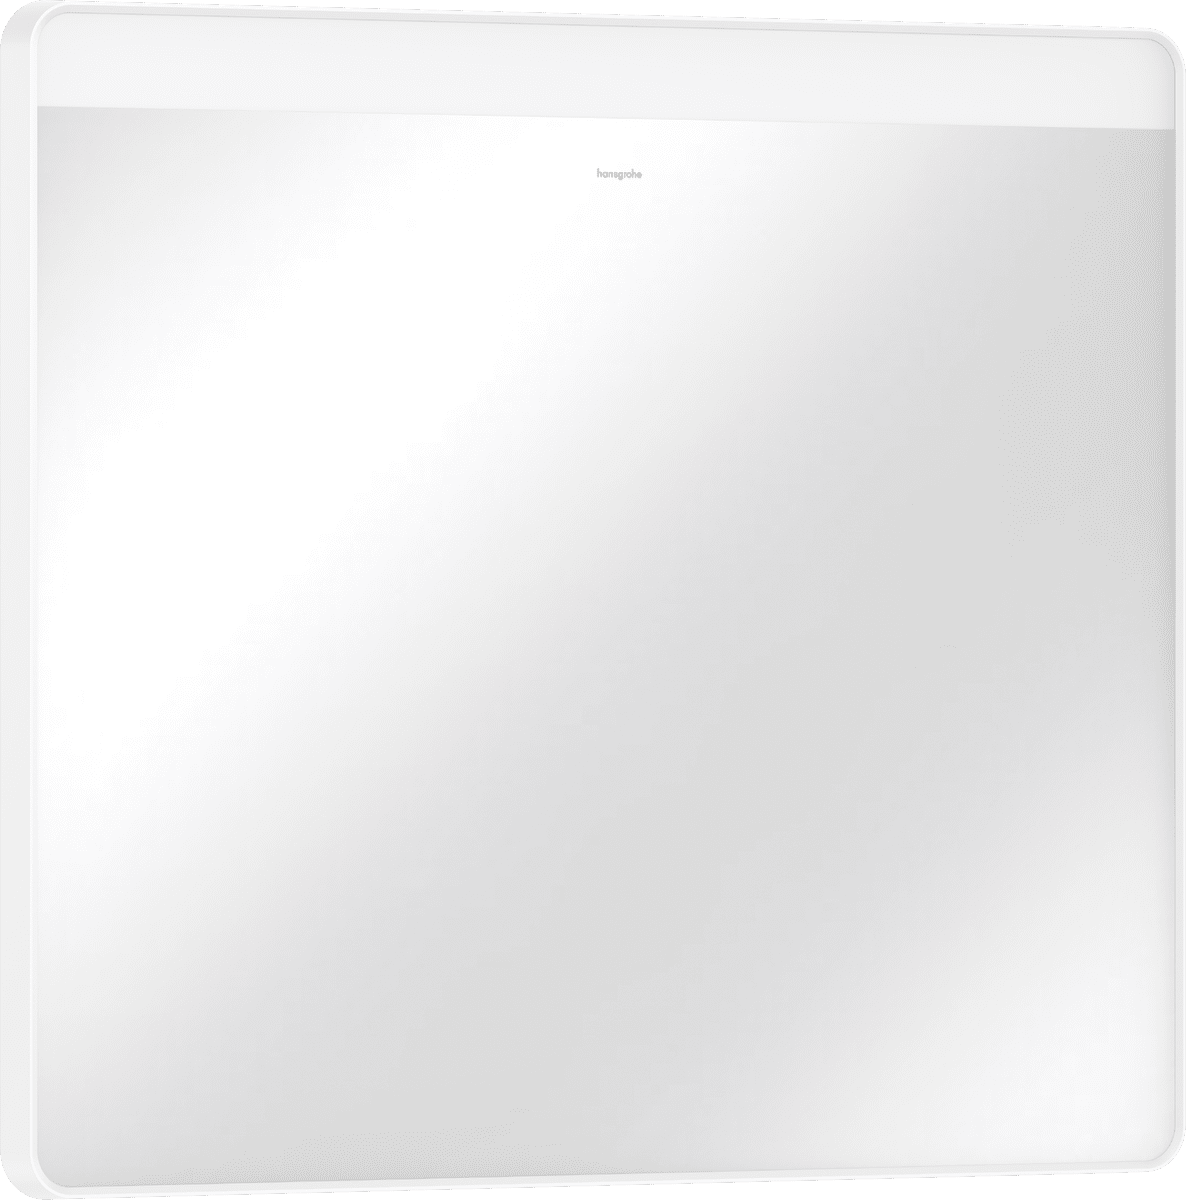 Obrázek HANSGROHE Xarita Lite Q zrcadlo s horizontálním LED osvětlením 800/30 nástěnný vypínač #54958700 - matná bílá